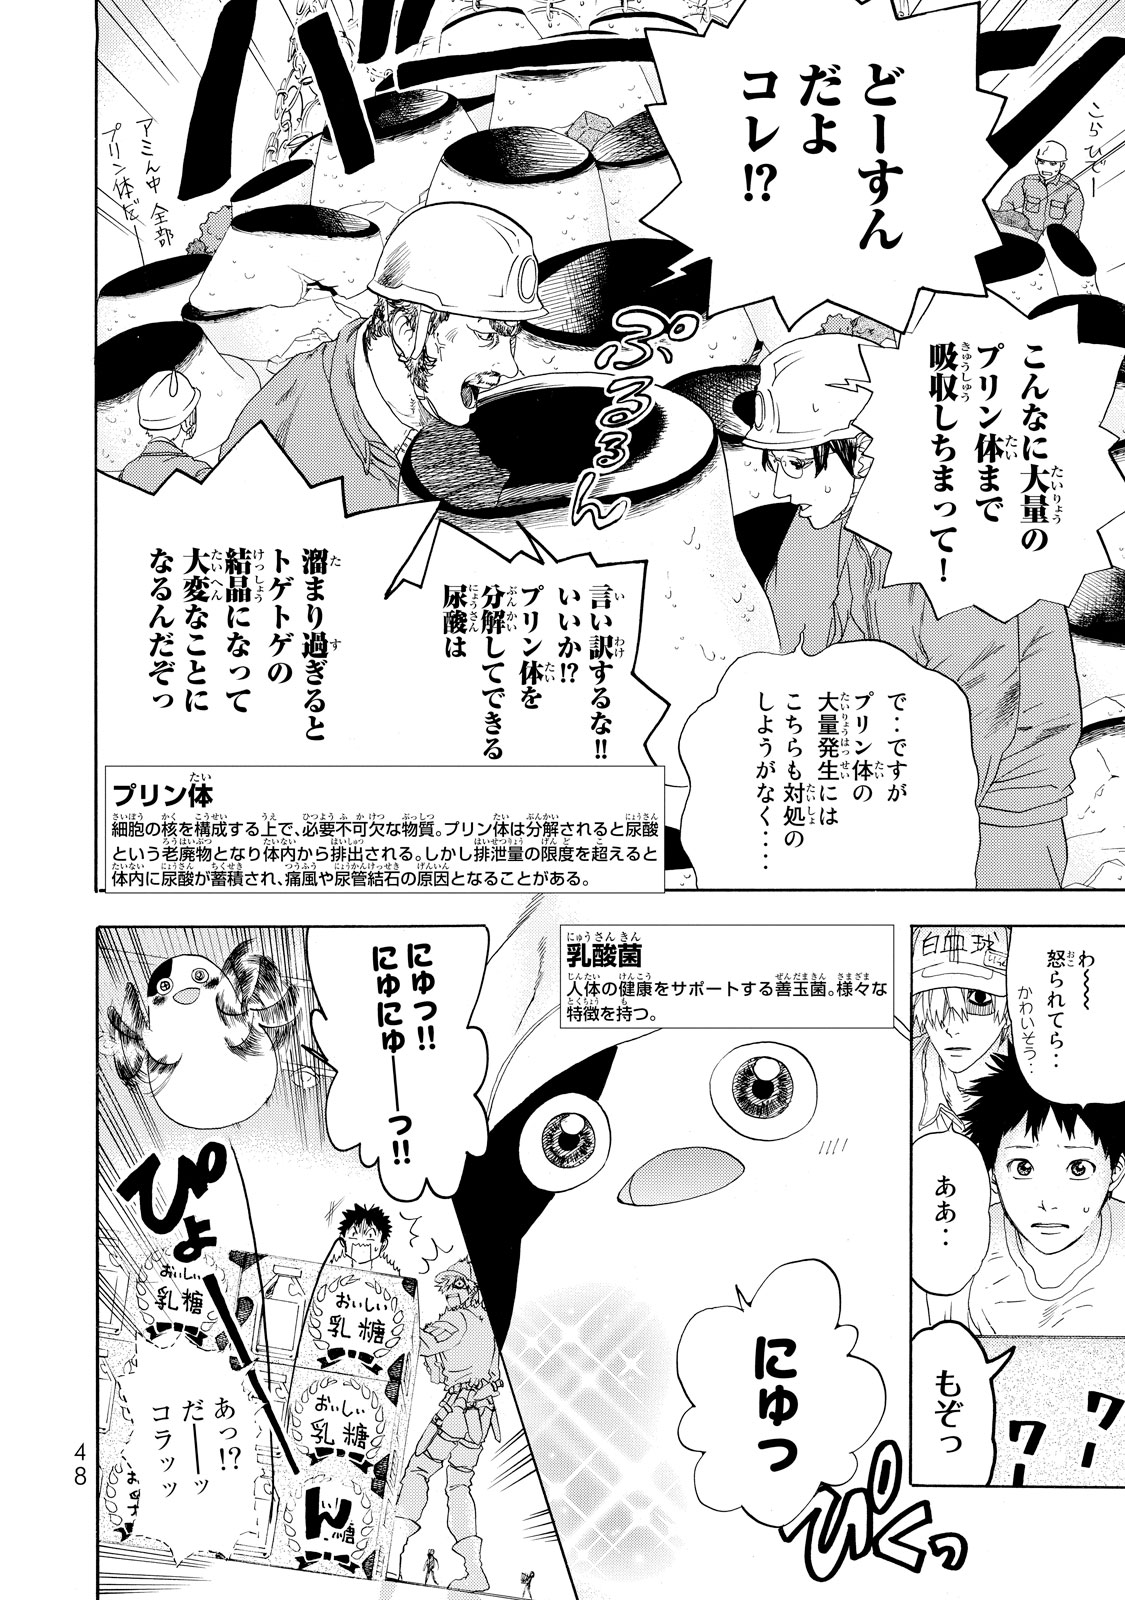 Hataraku Saibou - Chapter 21 - Page 4